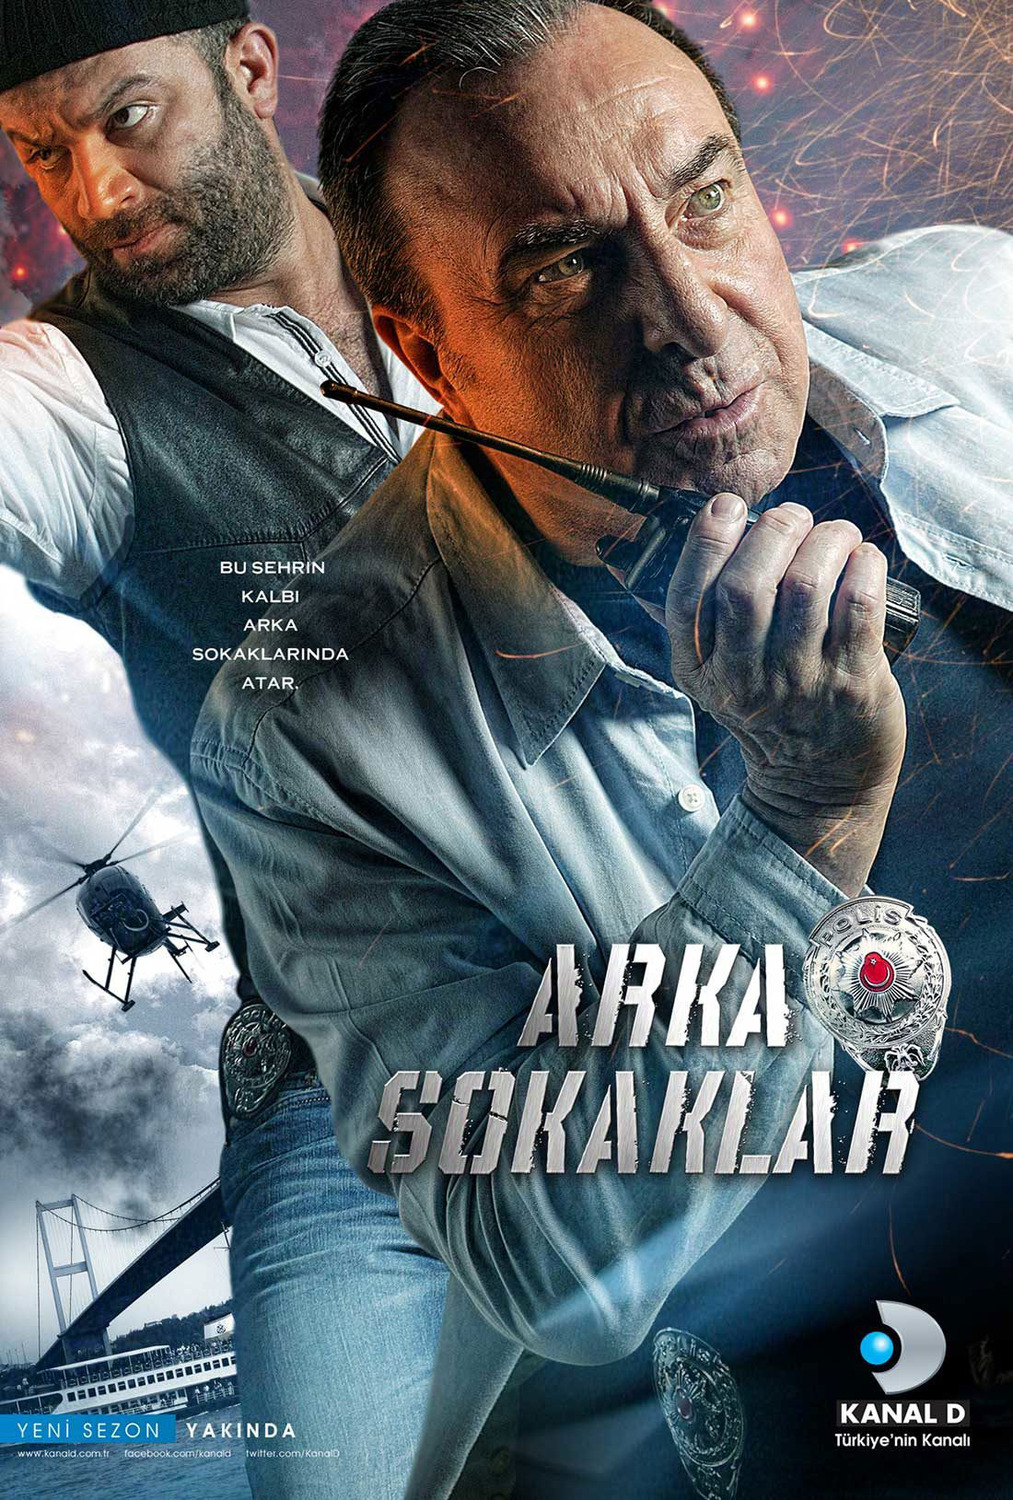 Extra Large TV Poster Image for Arka sokaklar (#6 of 11)